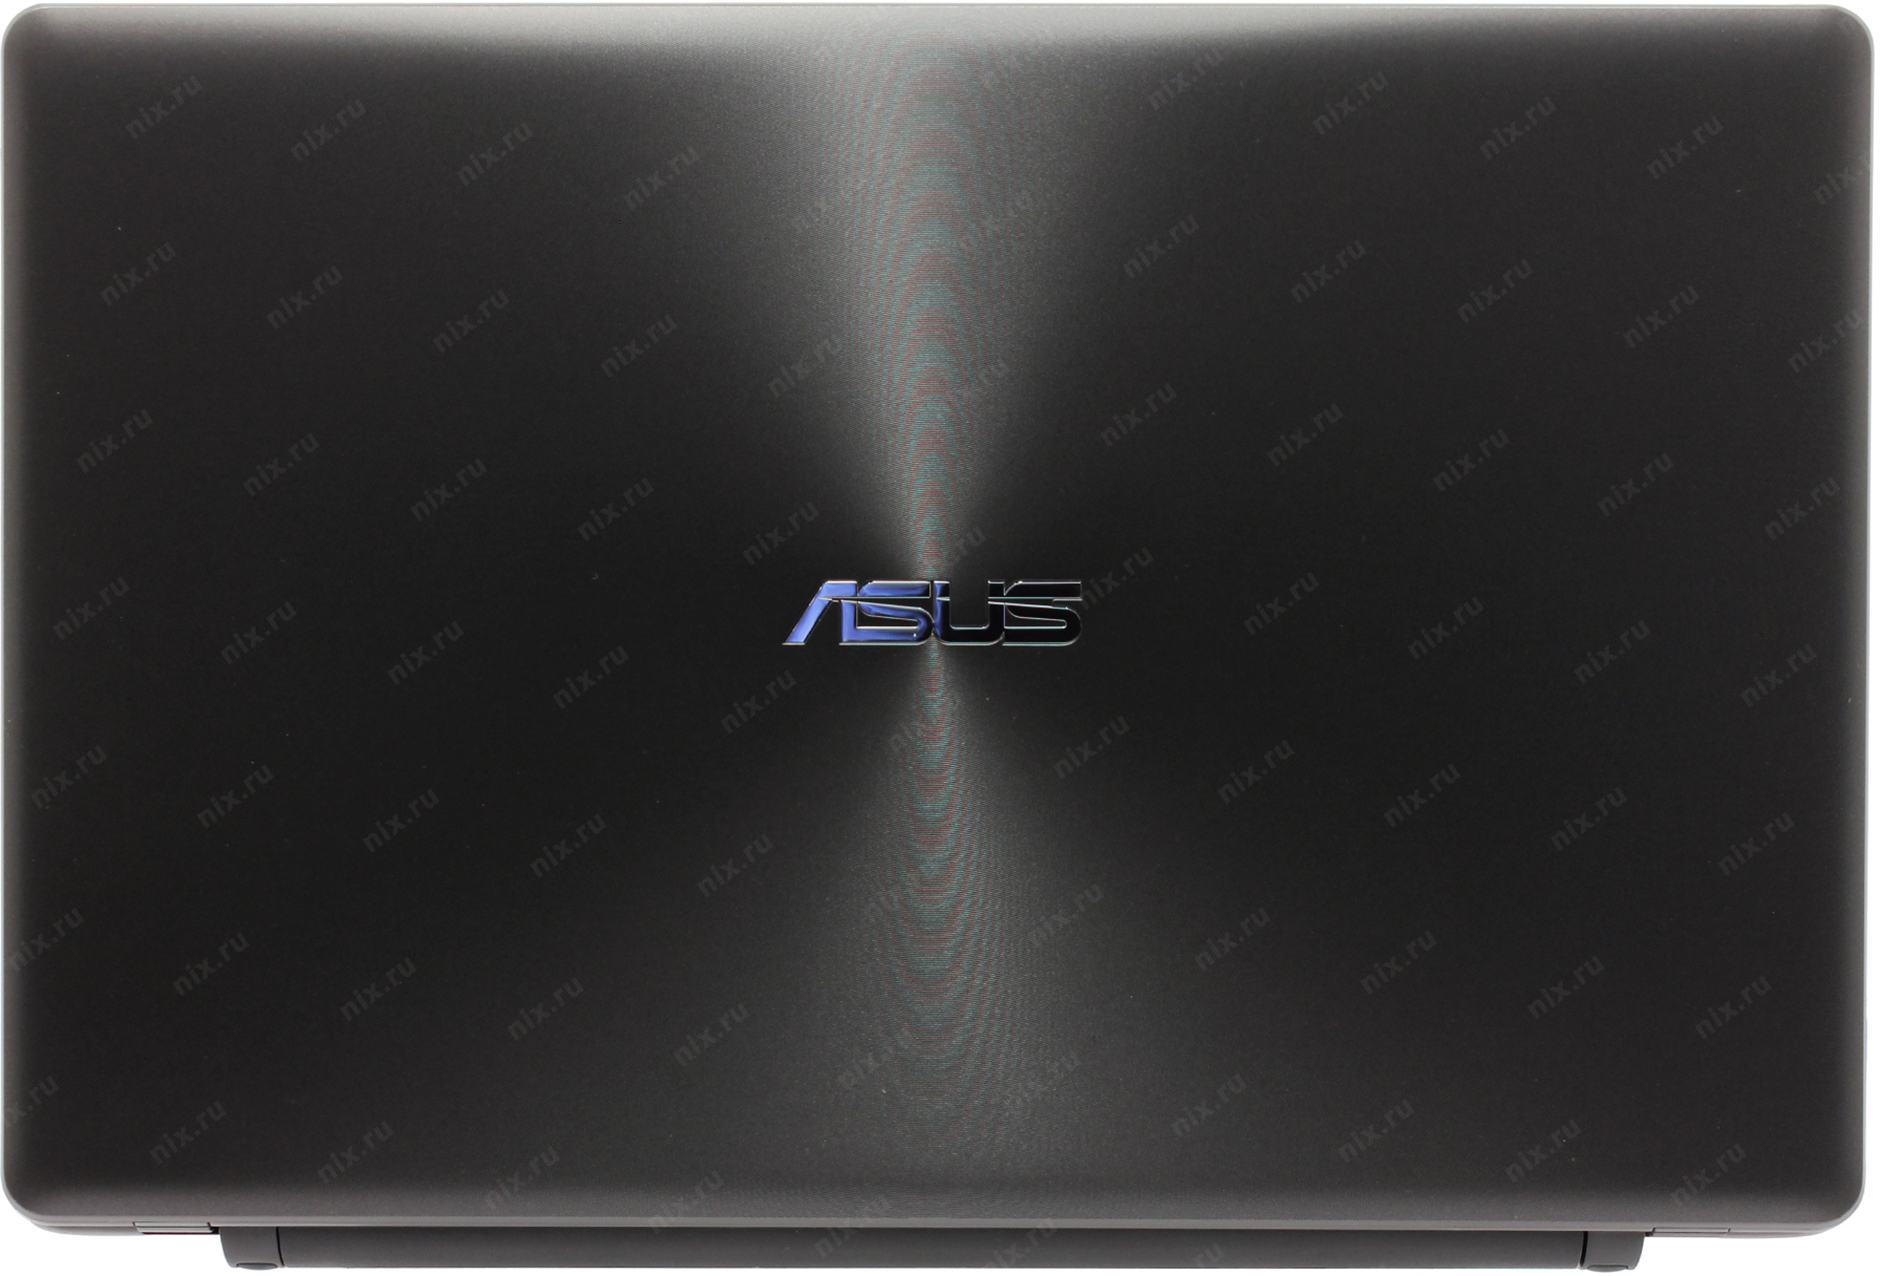 Ноутбук Асус X550c Цена Характеристики